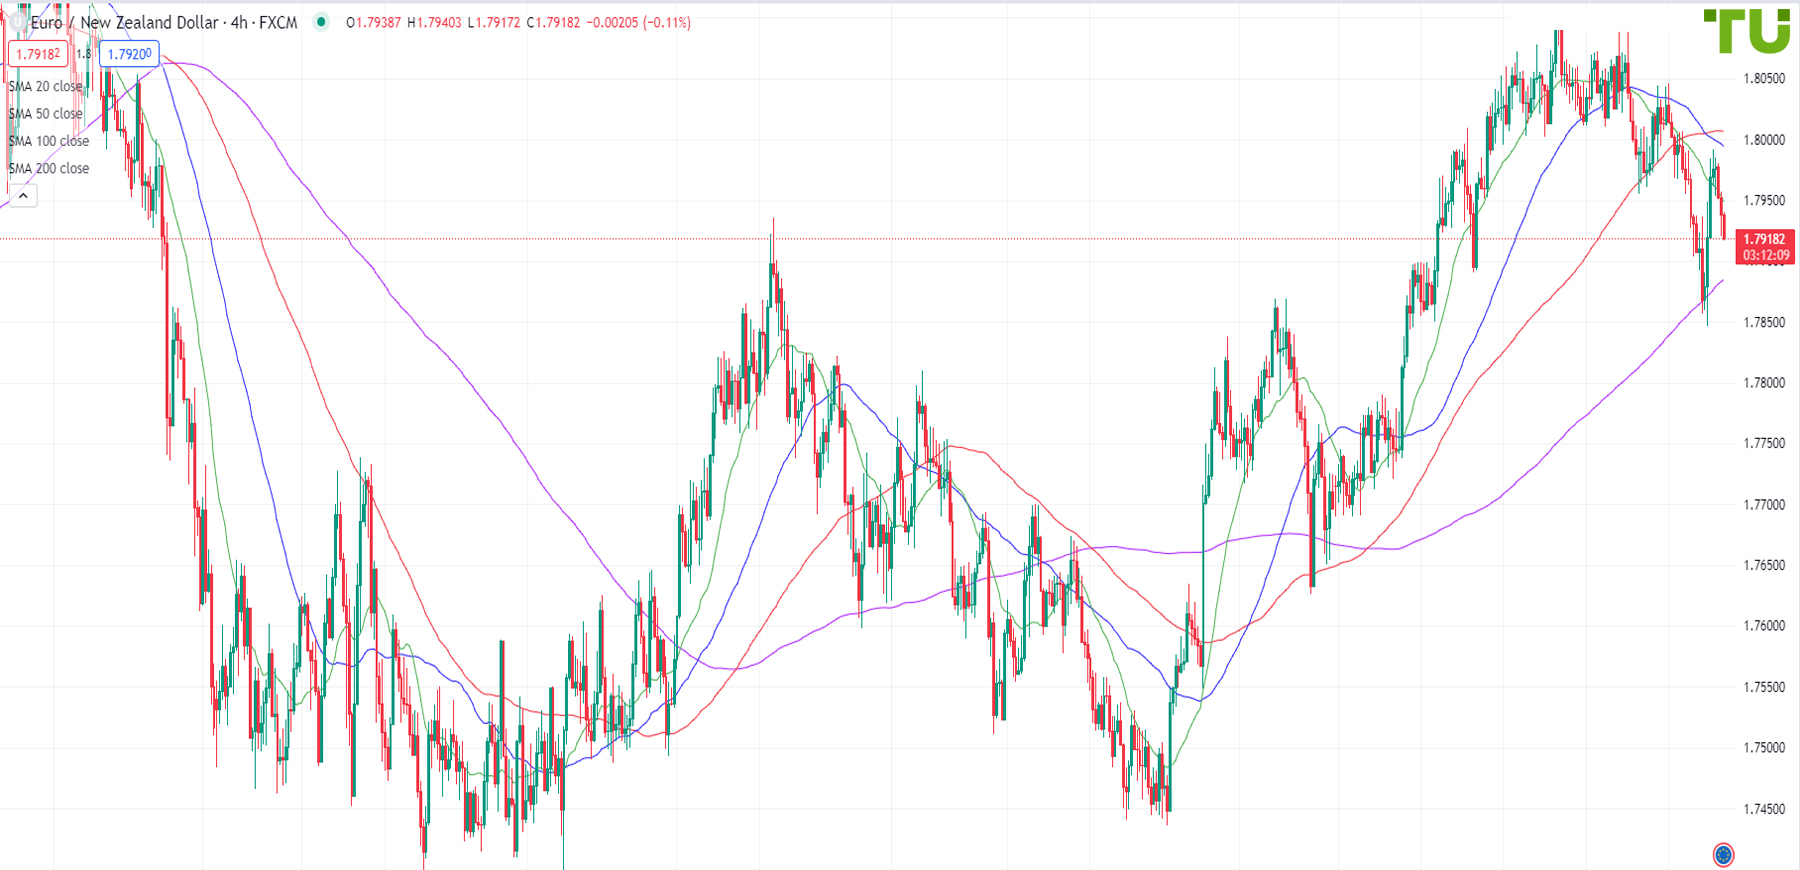 Euro/Kiwi under pressure after rebounding upwards